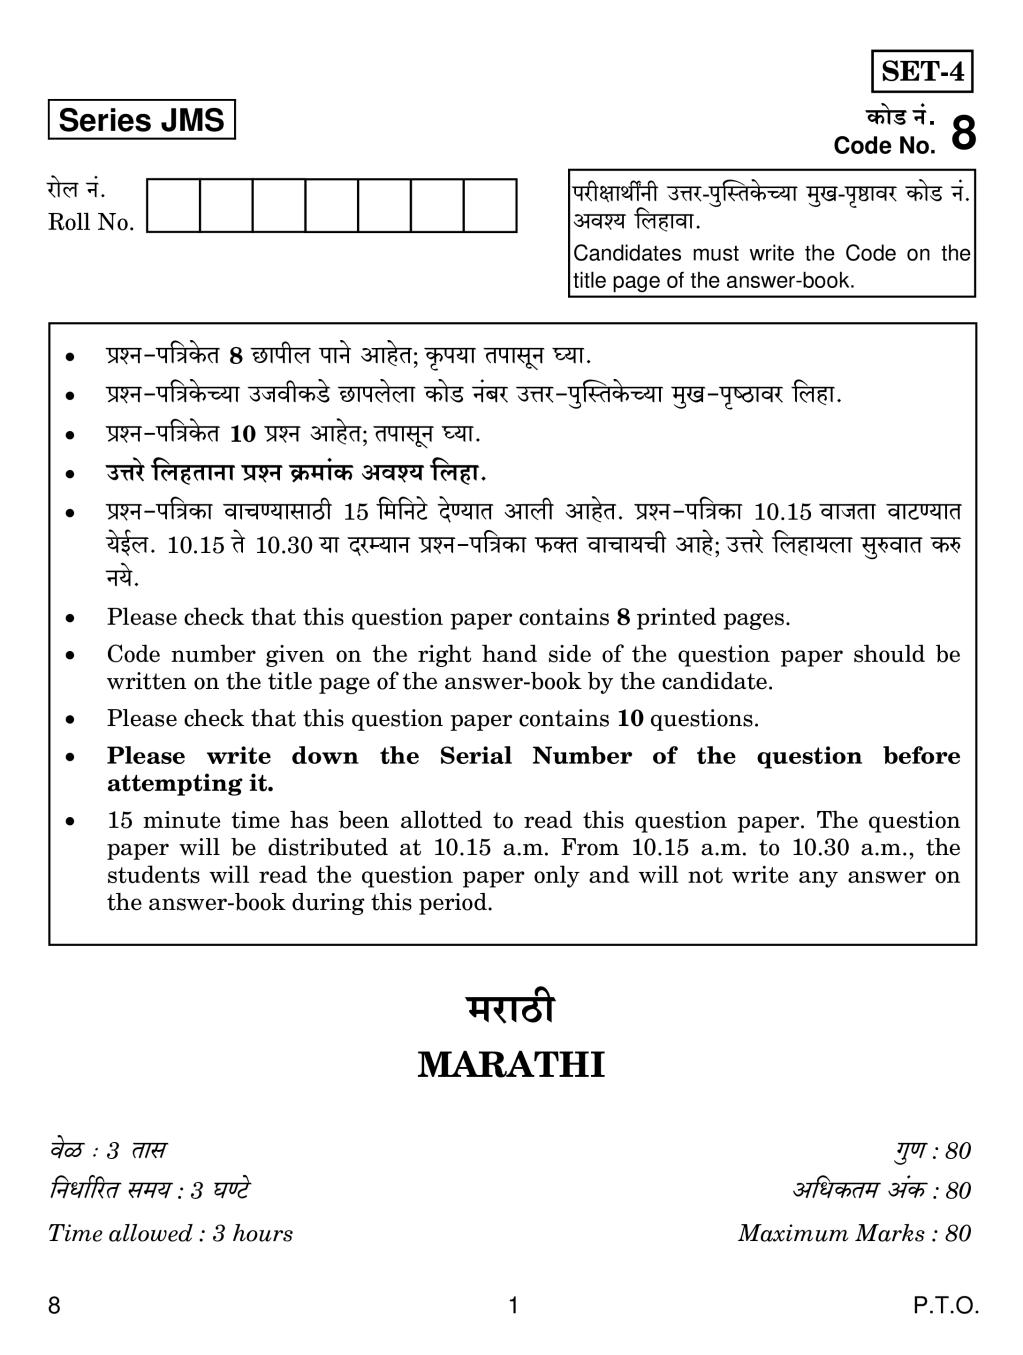 CBSE Class 10 Marathi Question Paper 2019 - Page 1